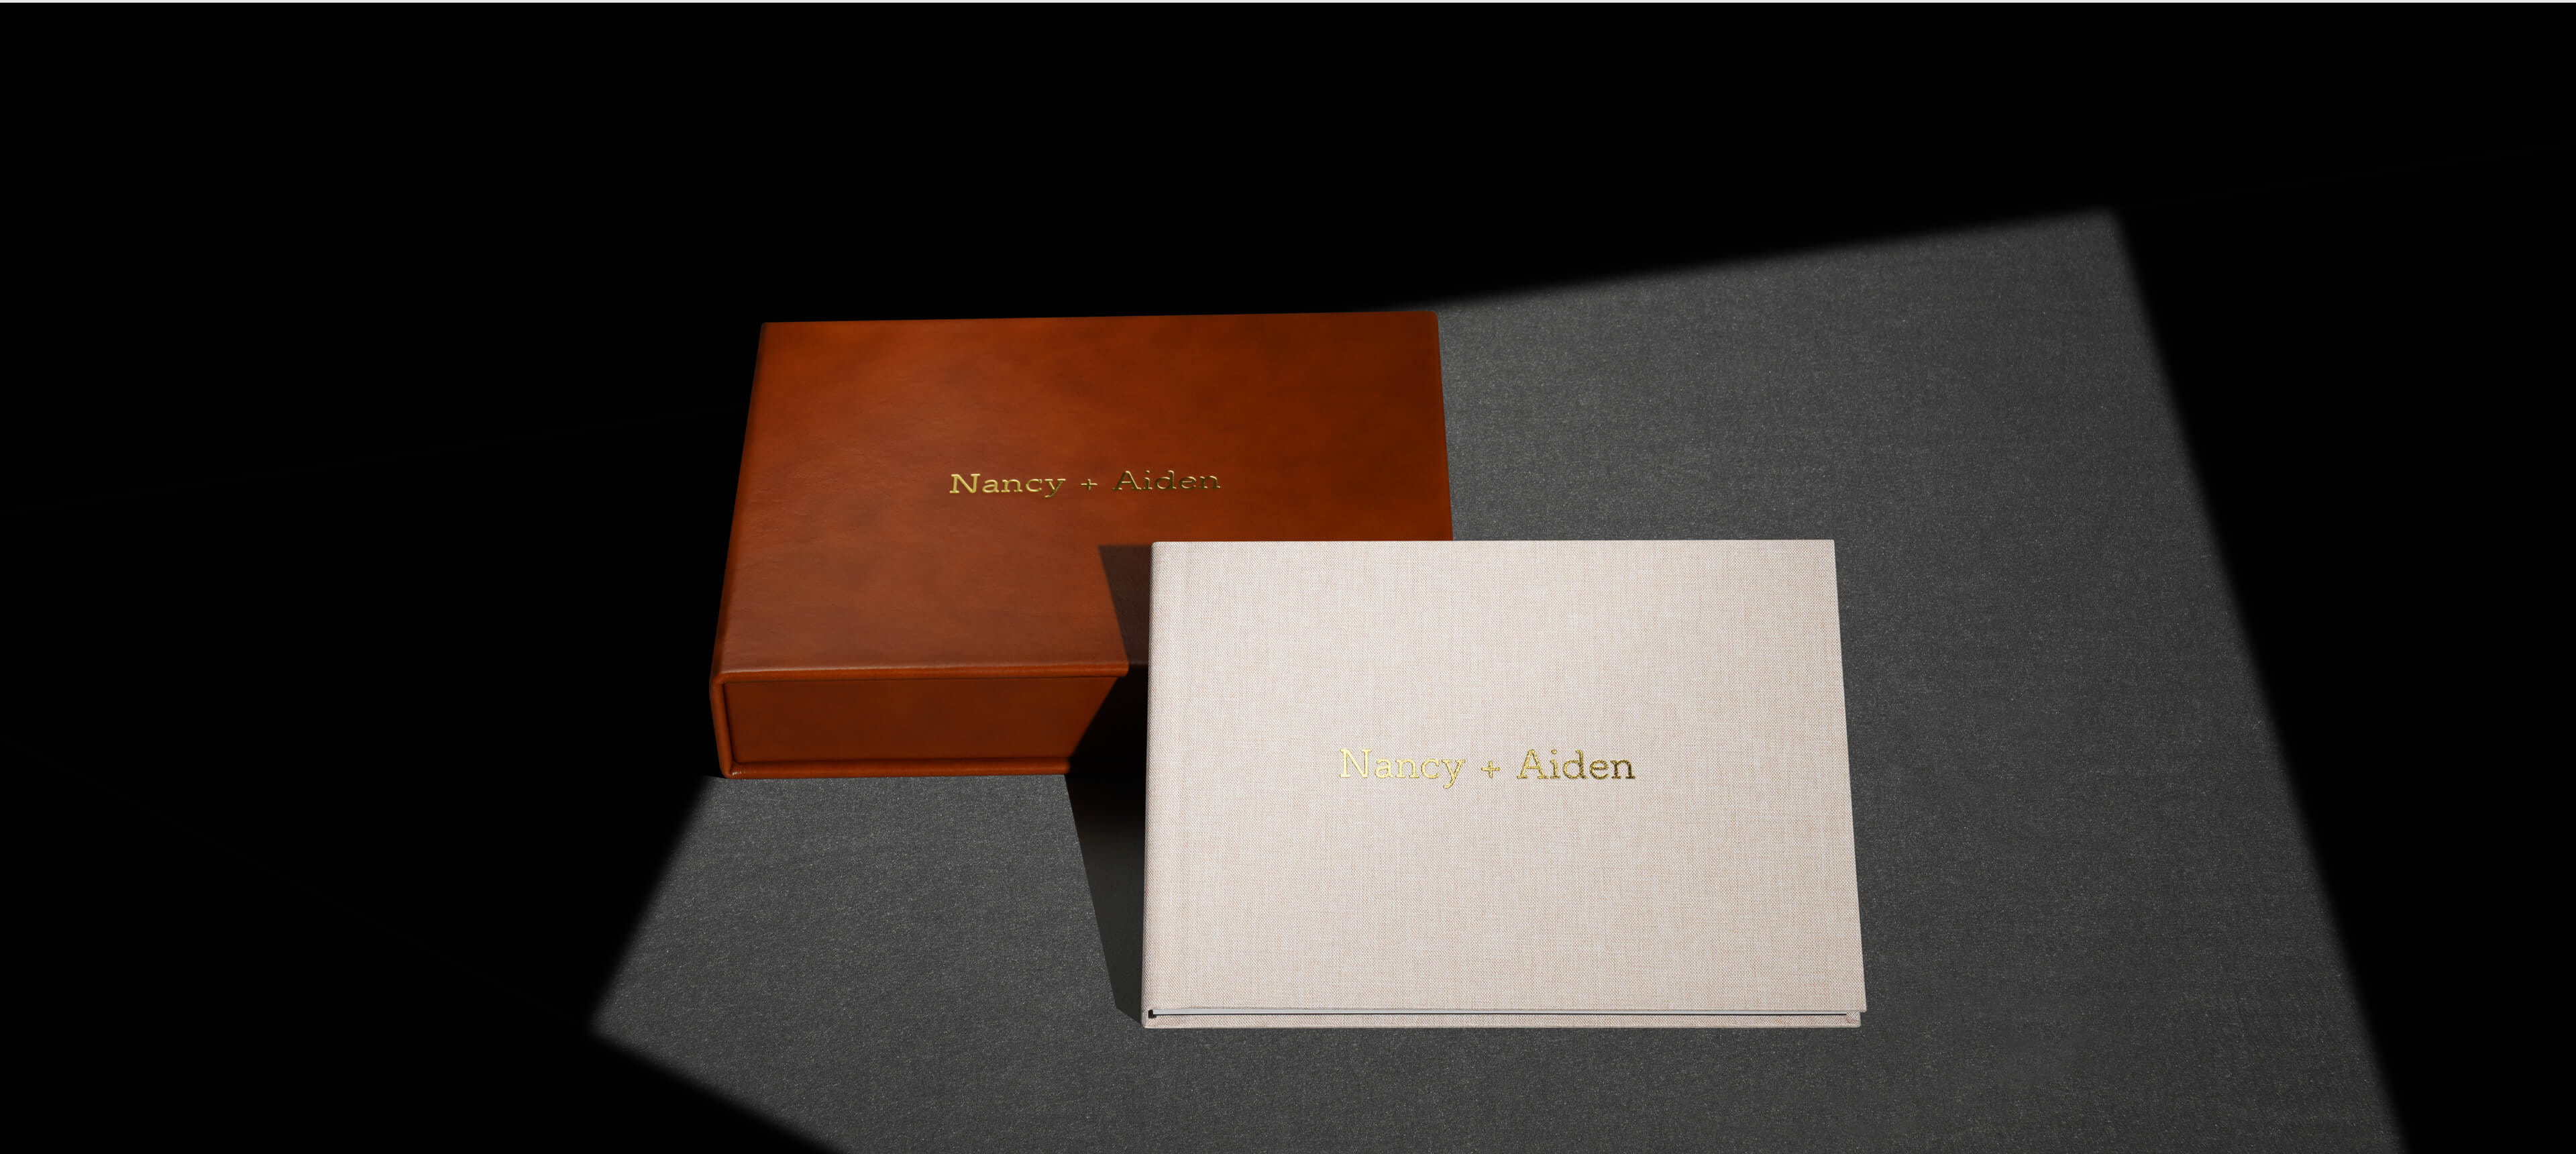 a presentation box album usb set showing showing a linen photo album leaning against a leather box